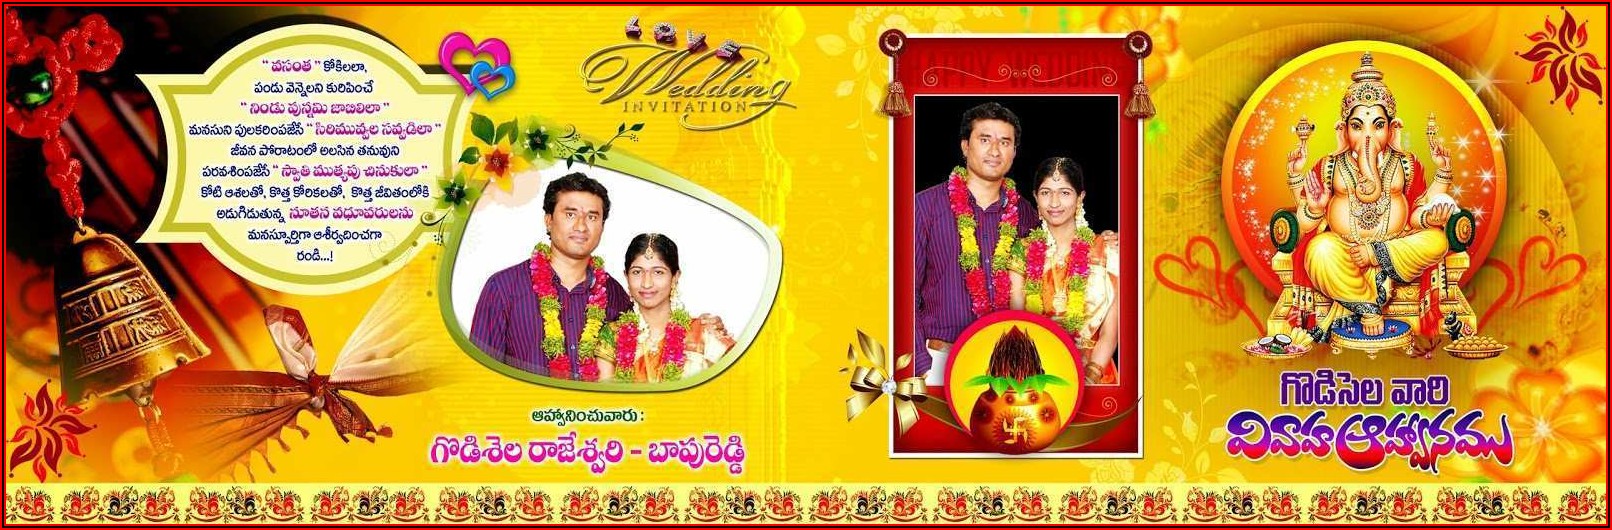 Indian Wedding Card Design Templates Free Download